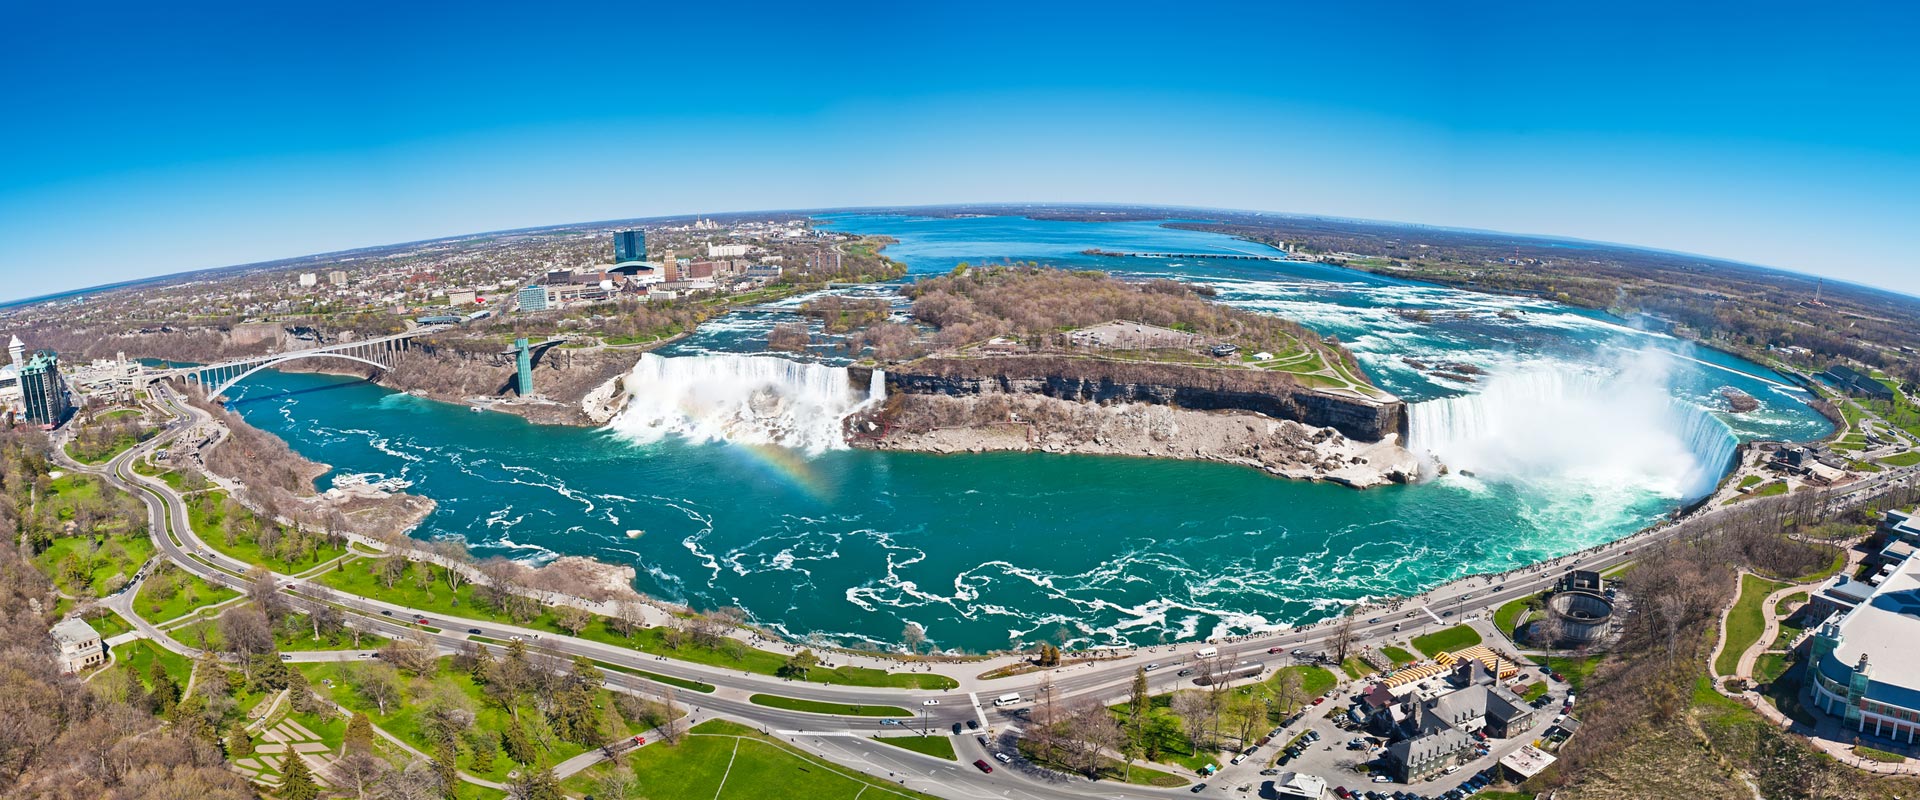 Private Luxury Tour to Niagara Falls from Toronto